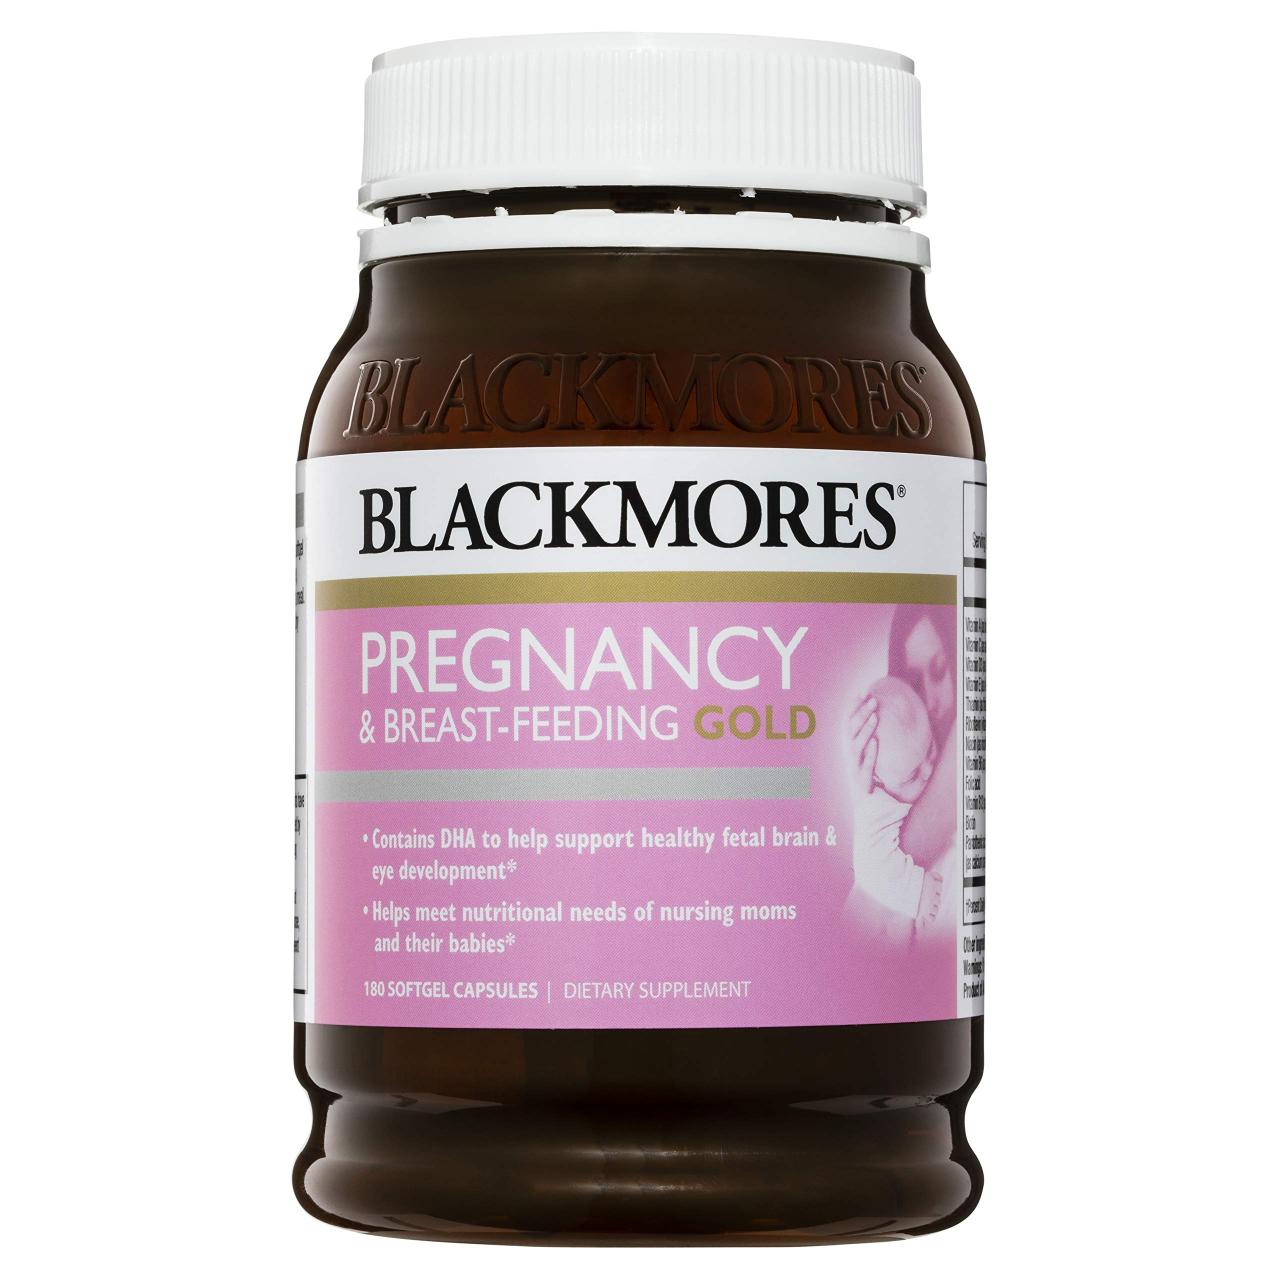 Blackmores pregnancy manfaat